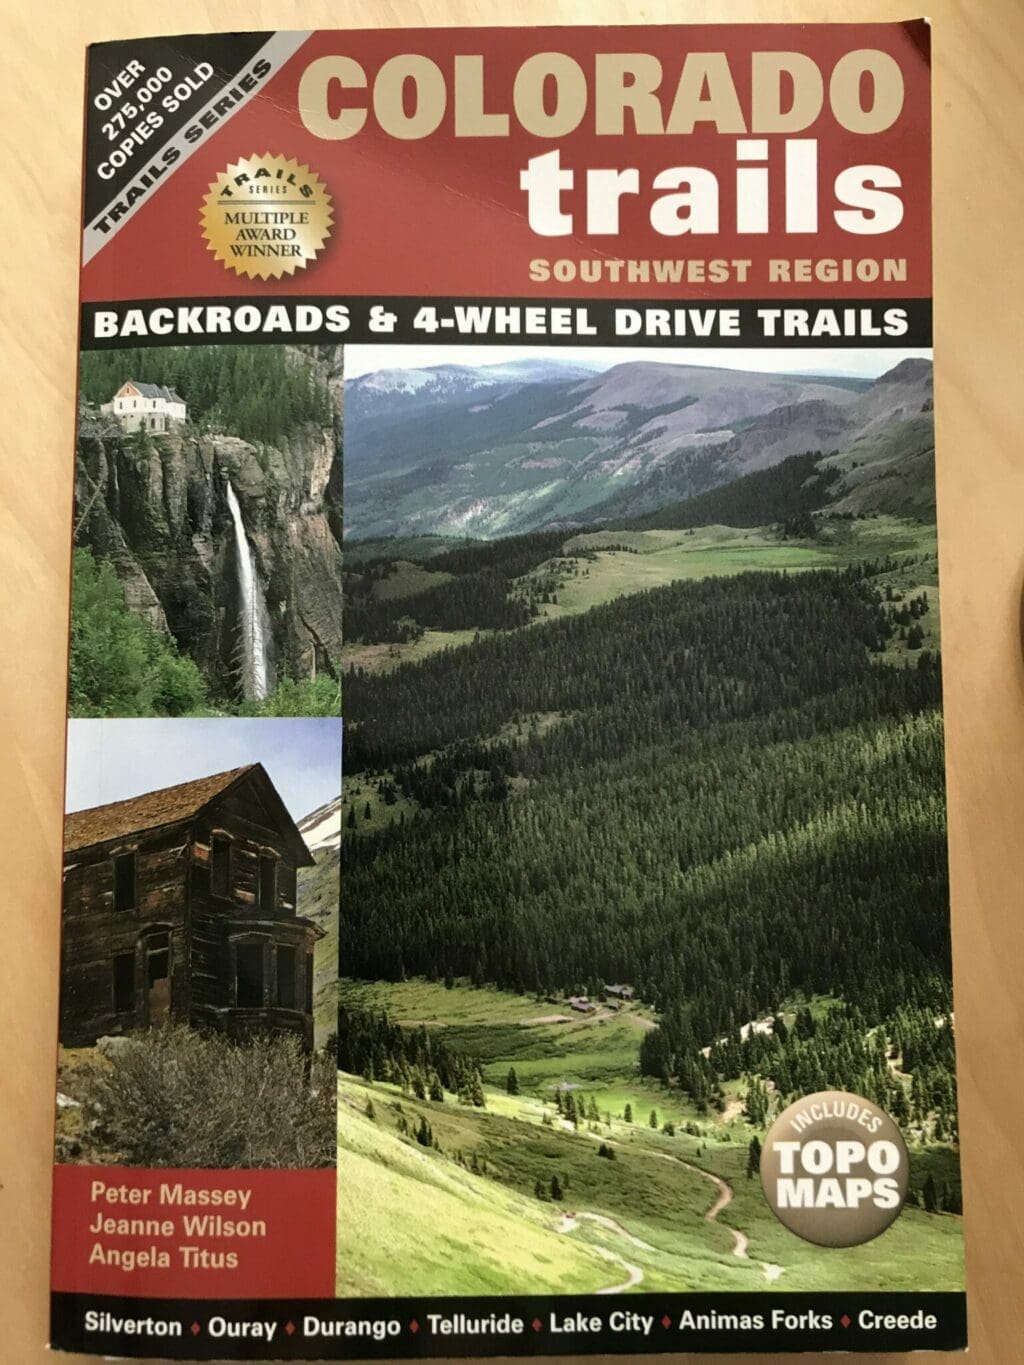 Colorado trails southwest region